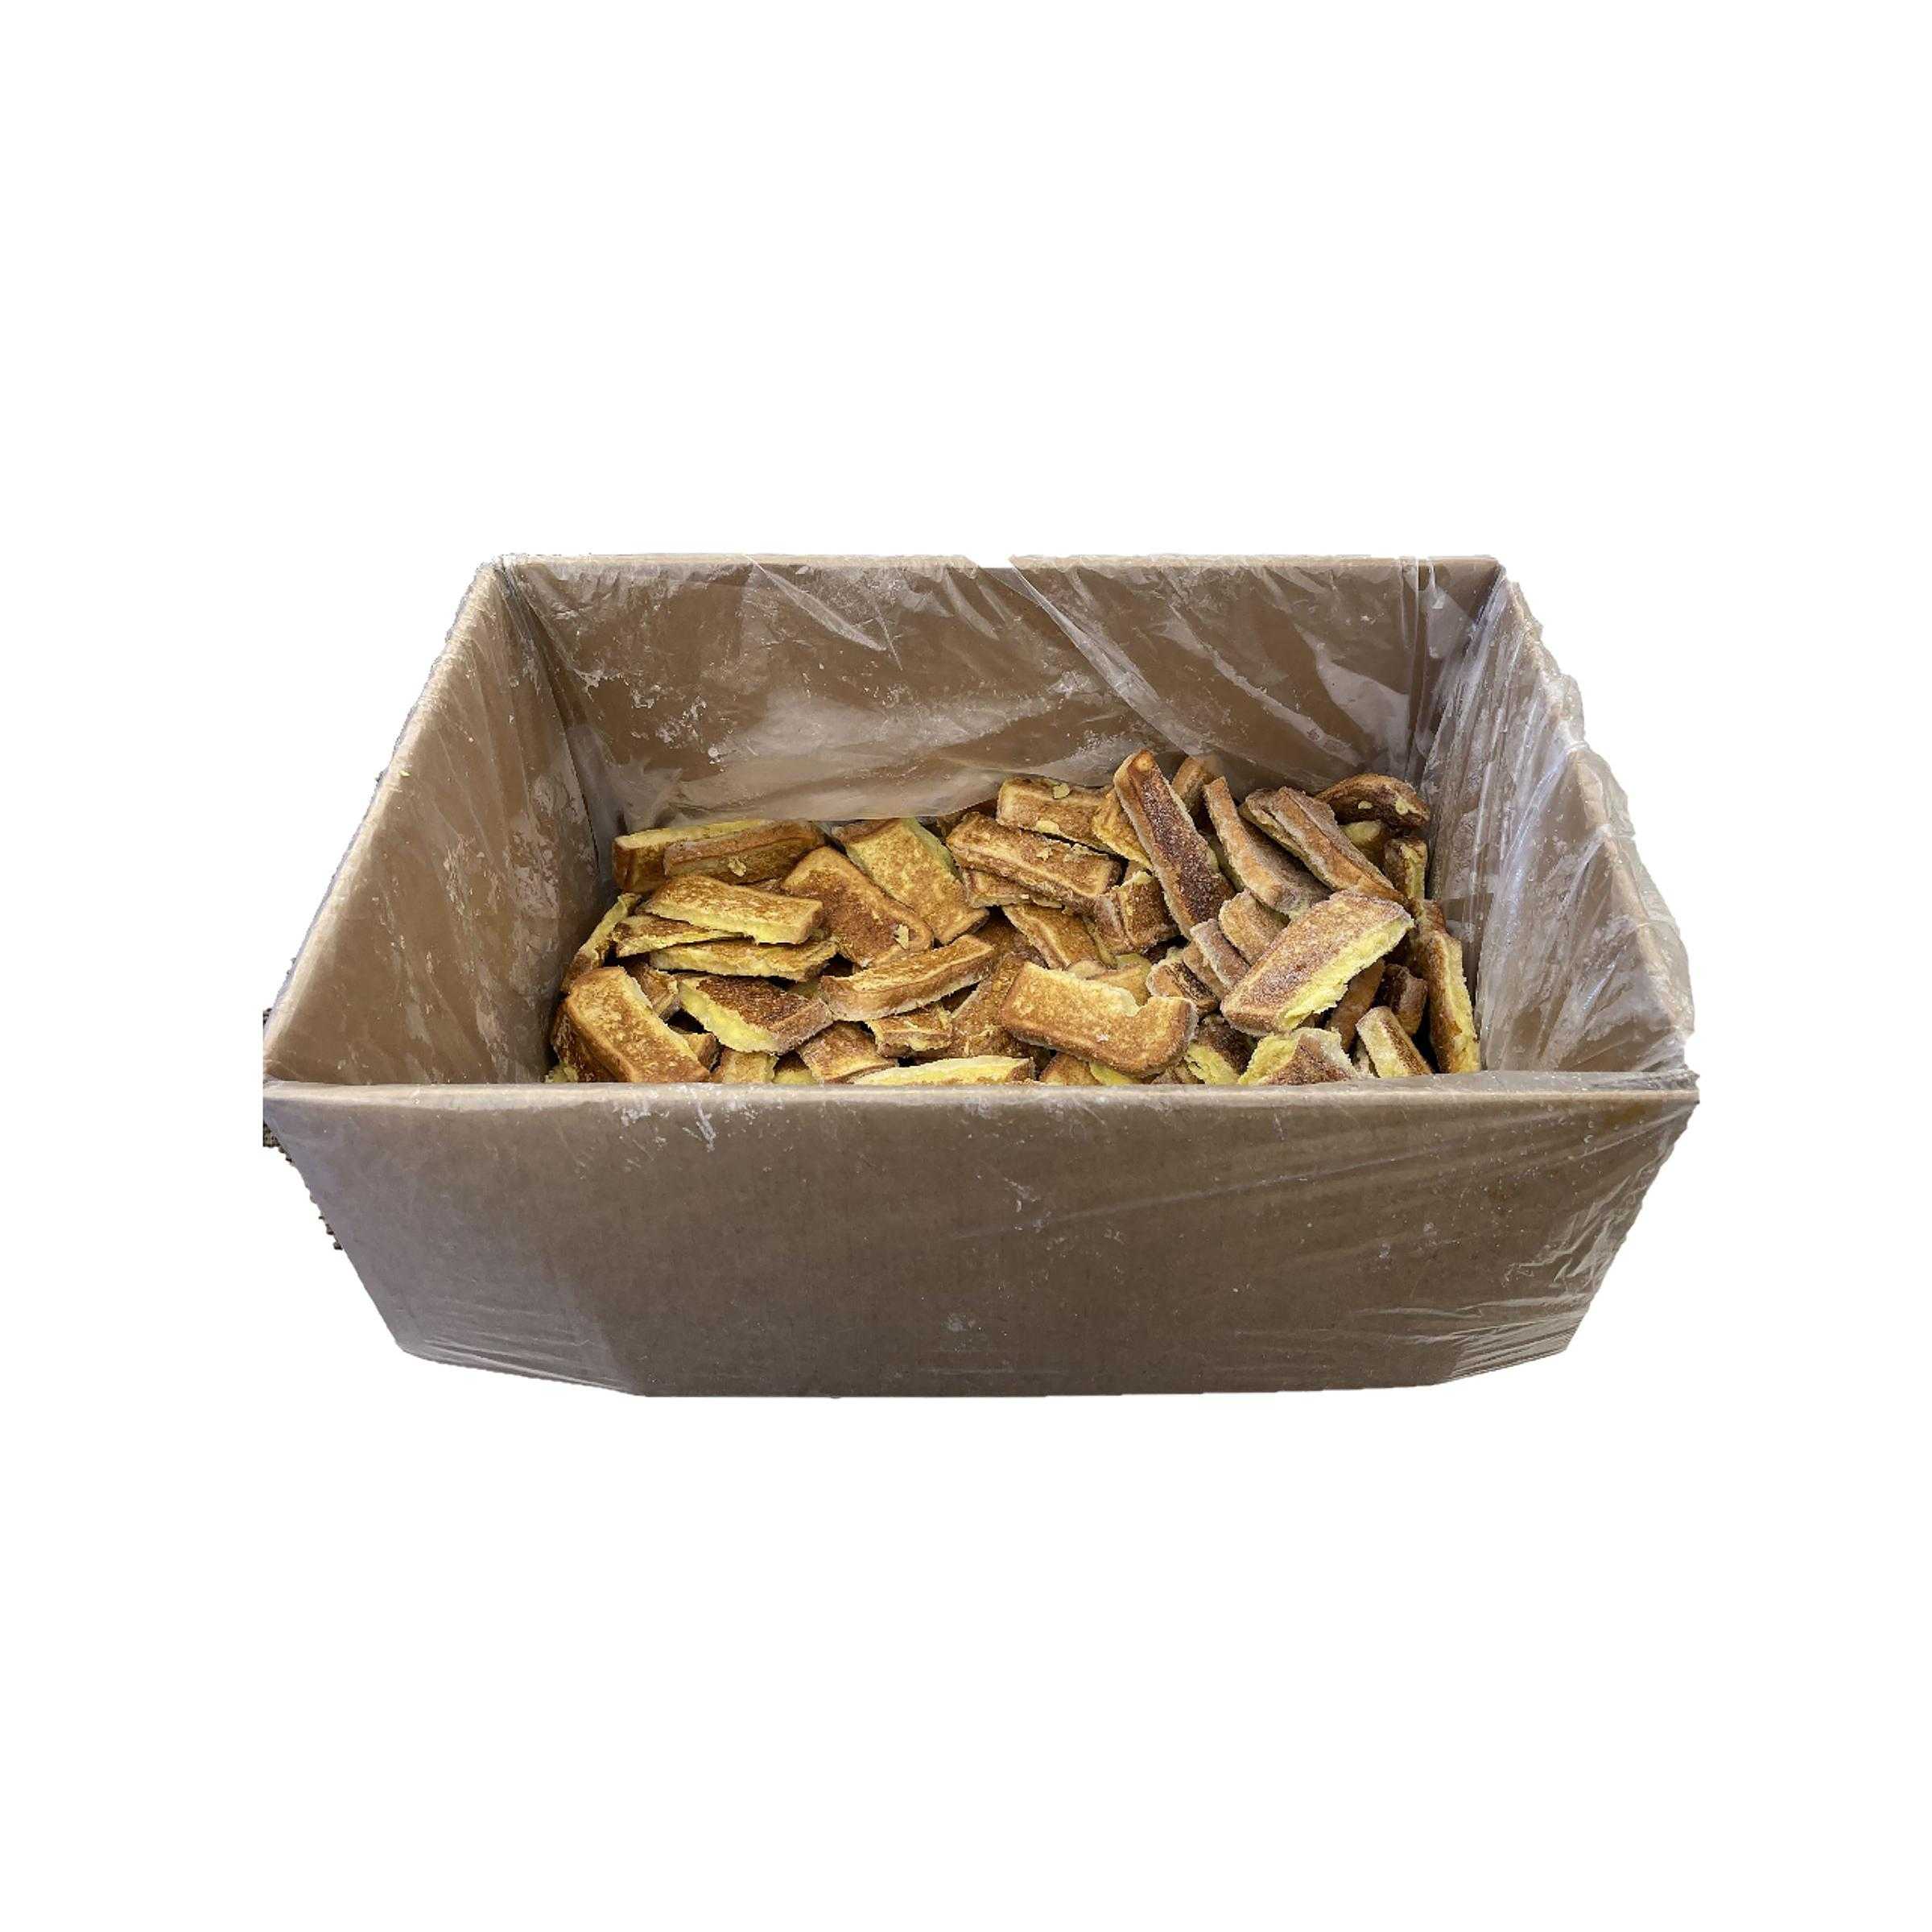 Papetti’s® Fully-Cooked Whole Grain Cinnamon Glaze French Toast Sticks, CN, 85/2.9 Oz